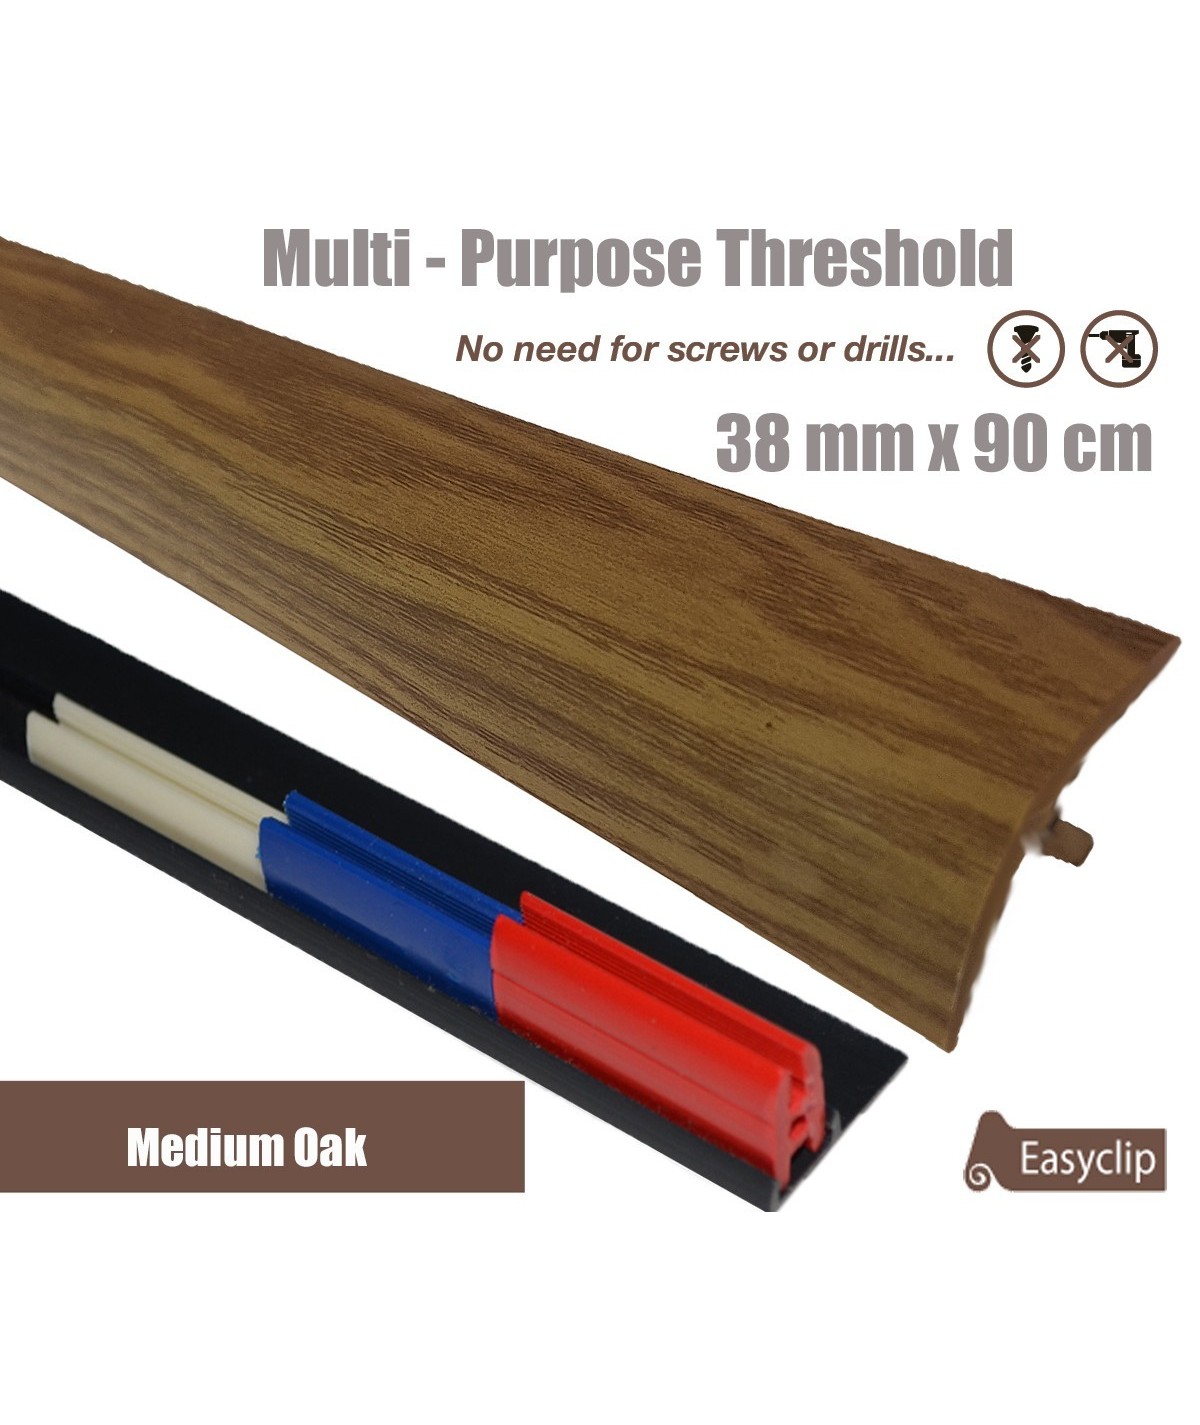 Medium Oak Adhesive Laminate Door Threshold Strip 38mm x 90cm Multi-Height/Pivots